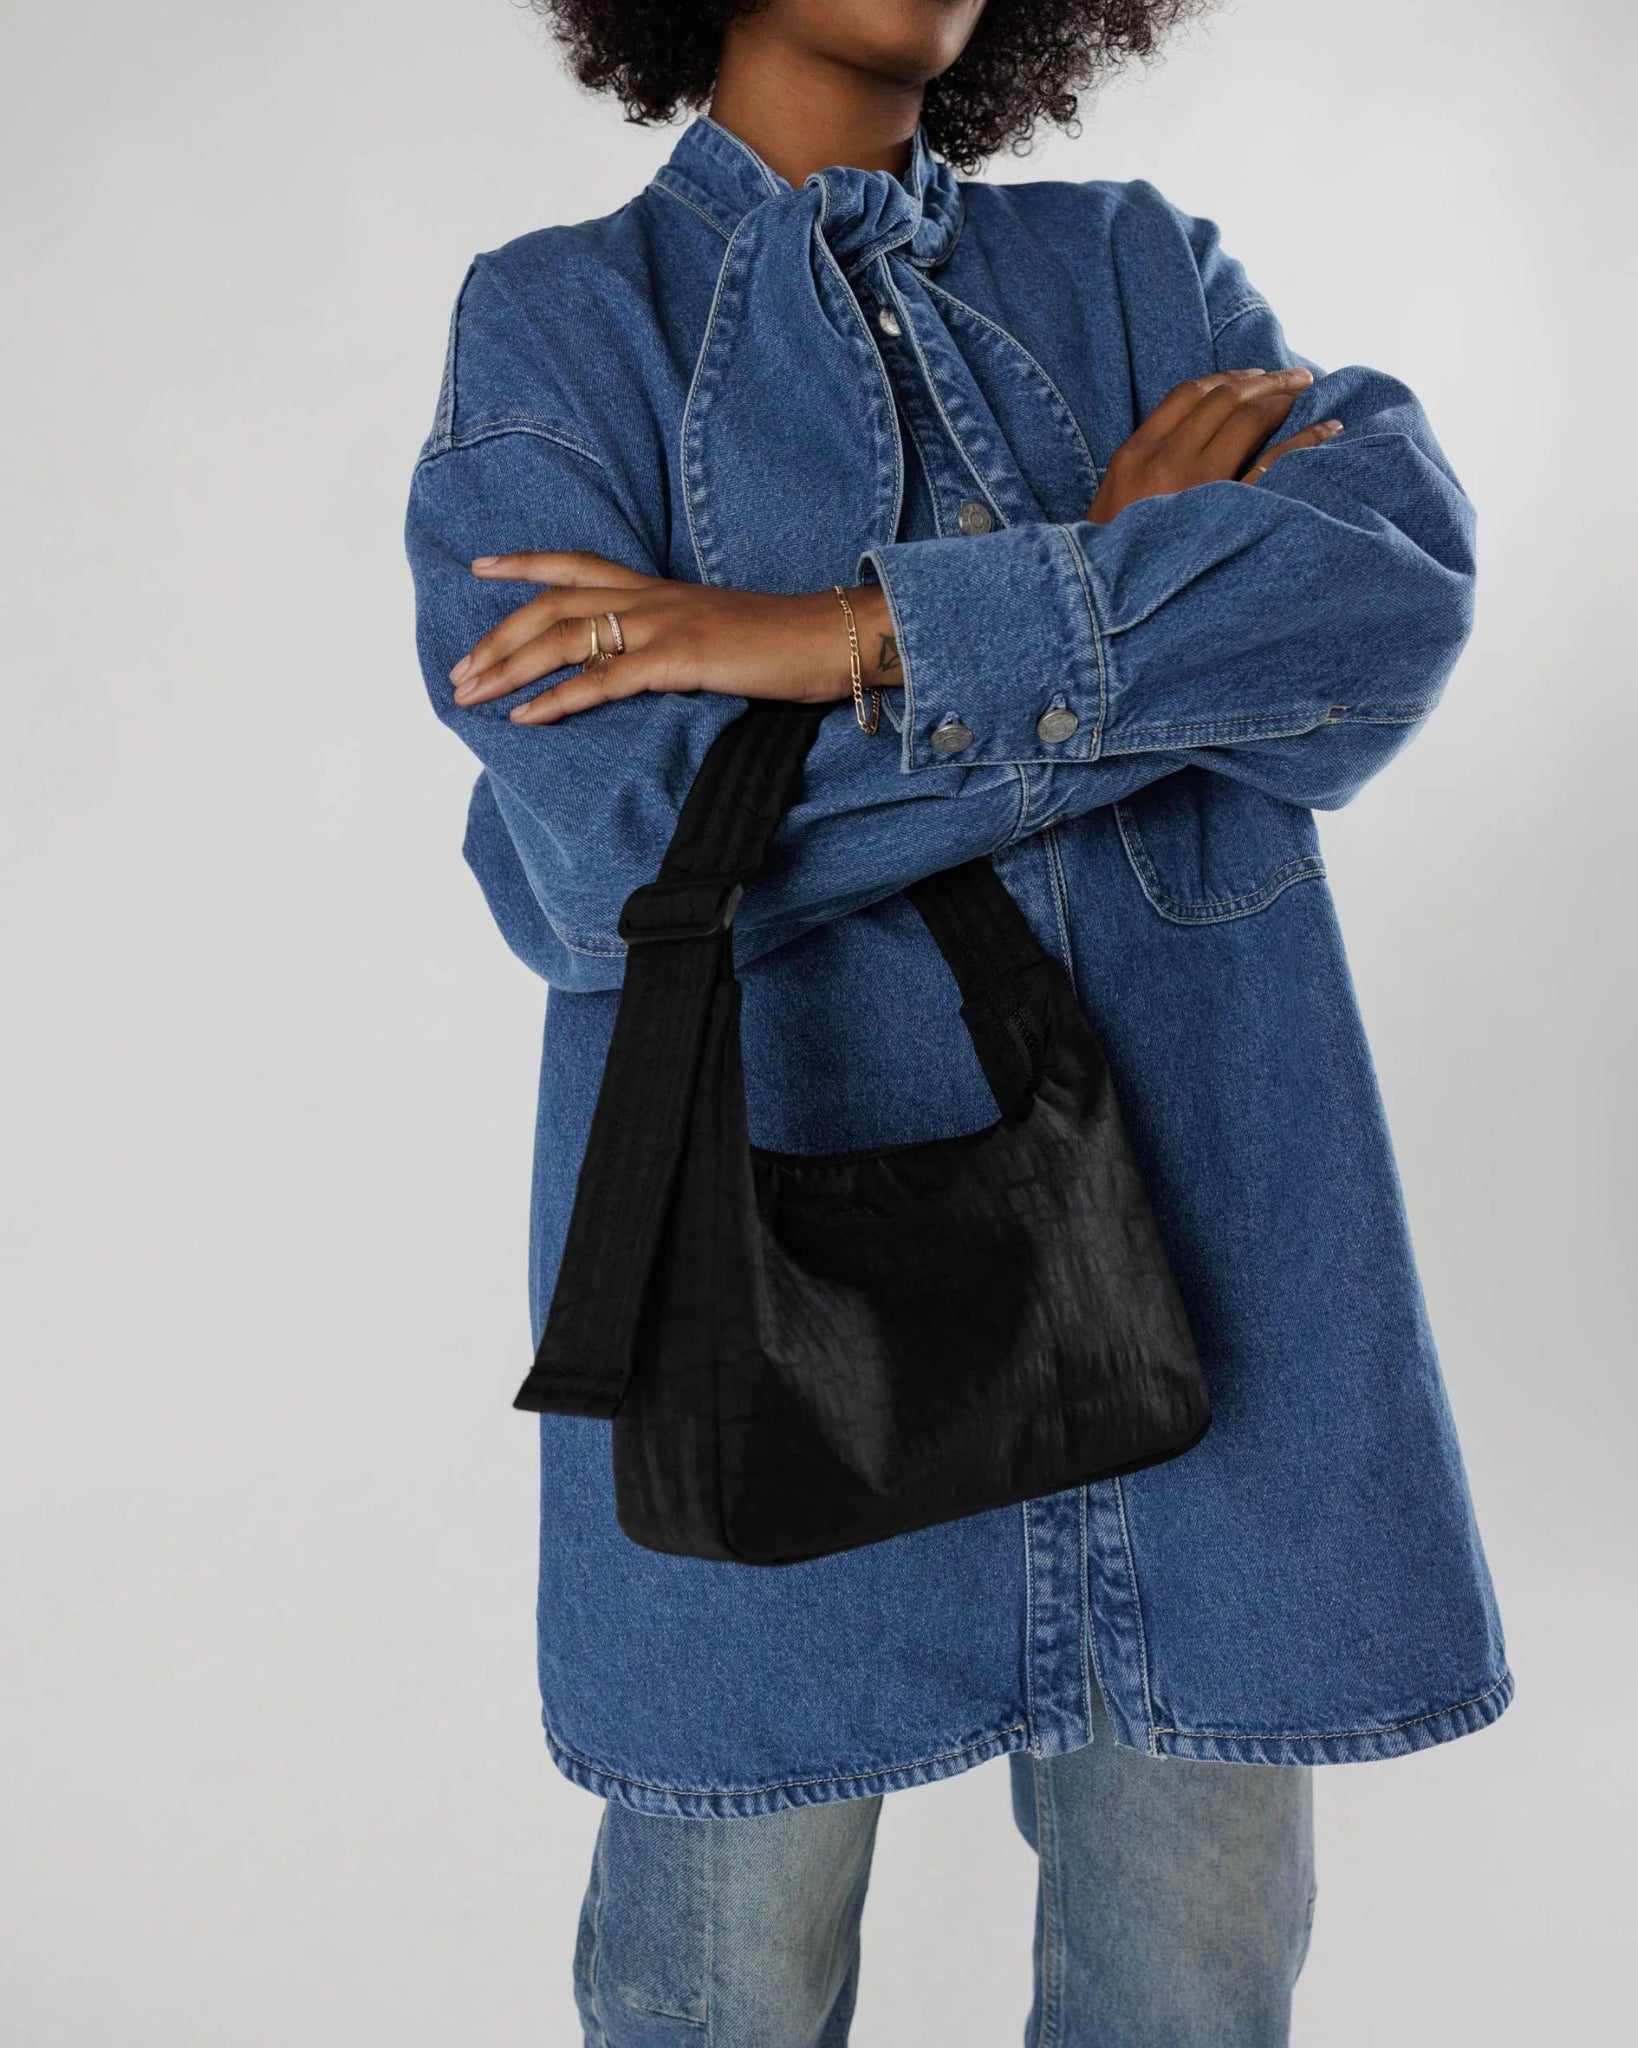 BAGGU Mini Nylon shoulder bag - Black - Preston ApothecaryBaggu